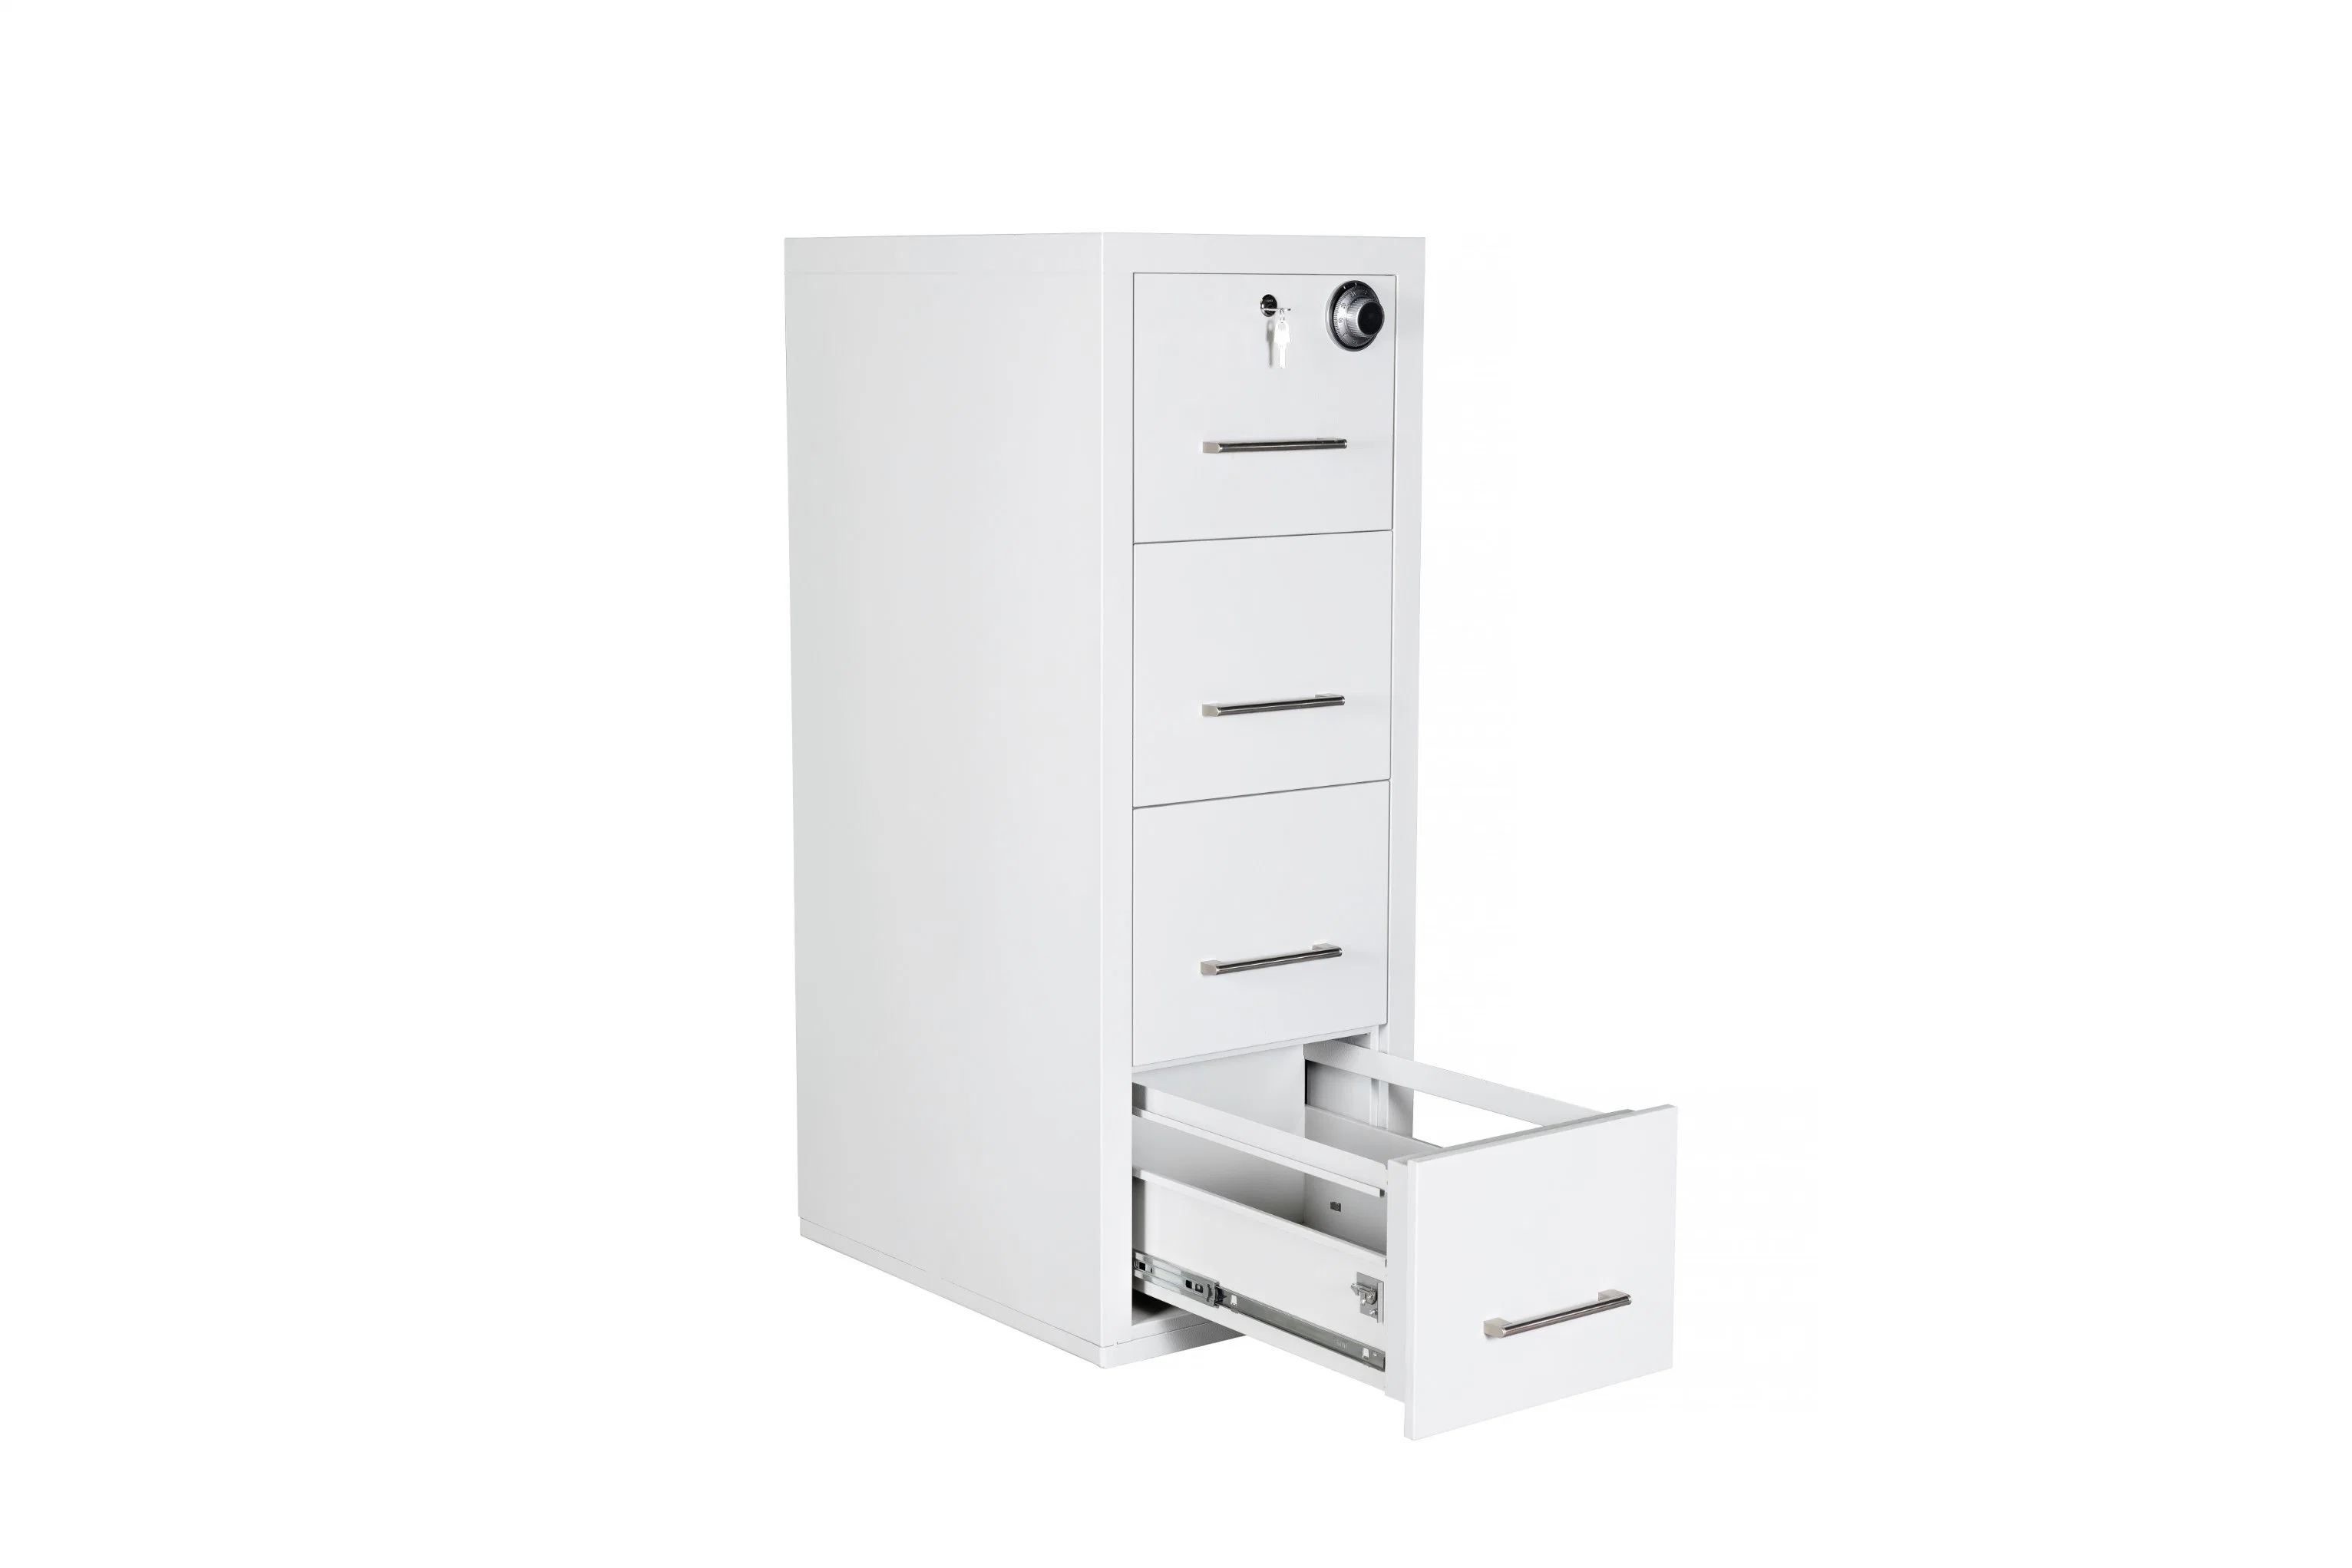 Vertical 4 Drawer Metal Cupboard Safe Storage Filing Cabinet Fireproof 1 Hour Metal Cabinet with Digital Lock